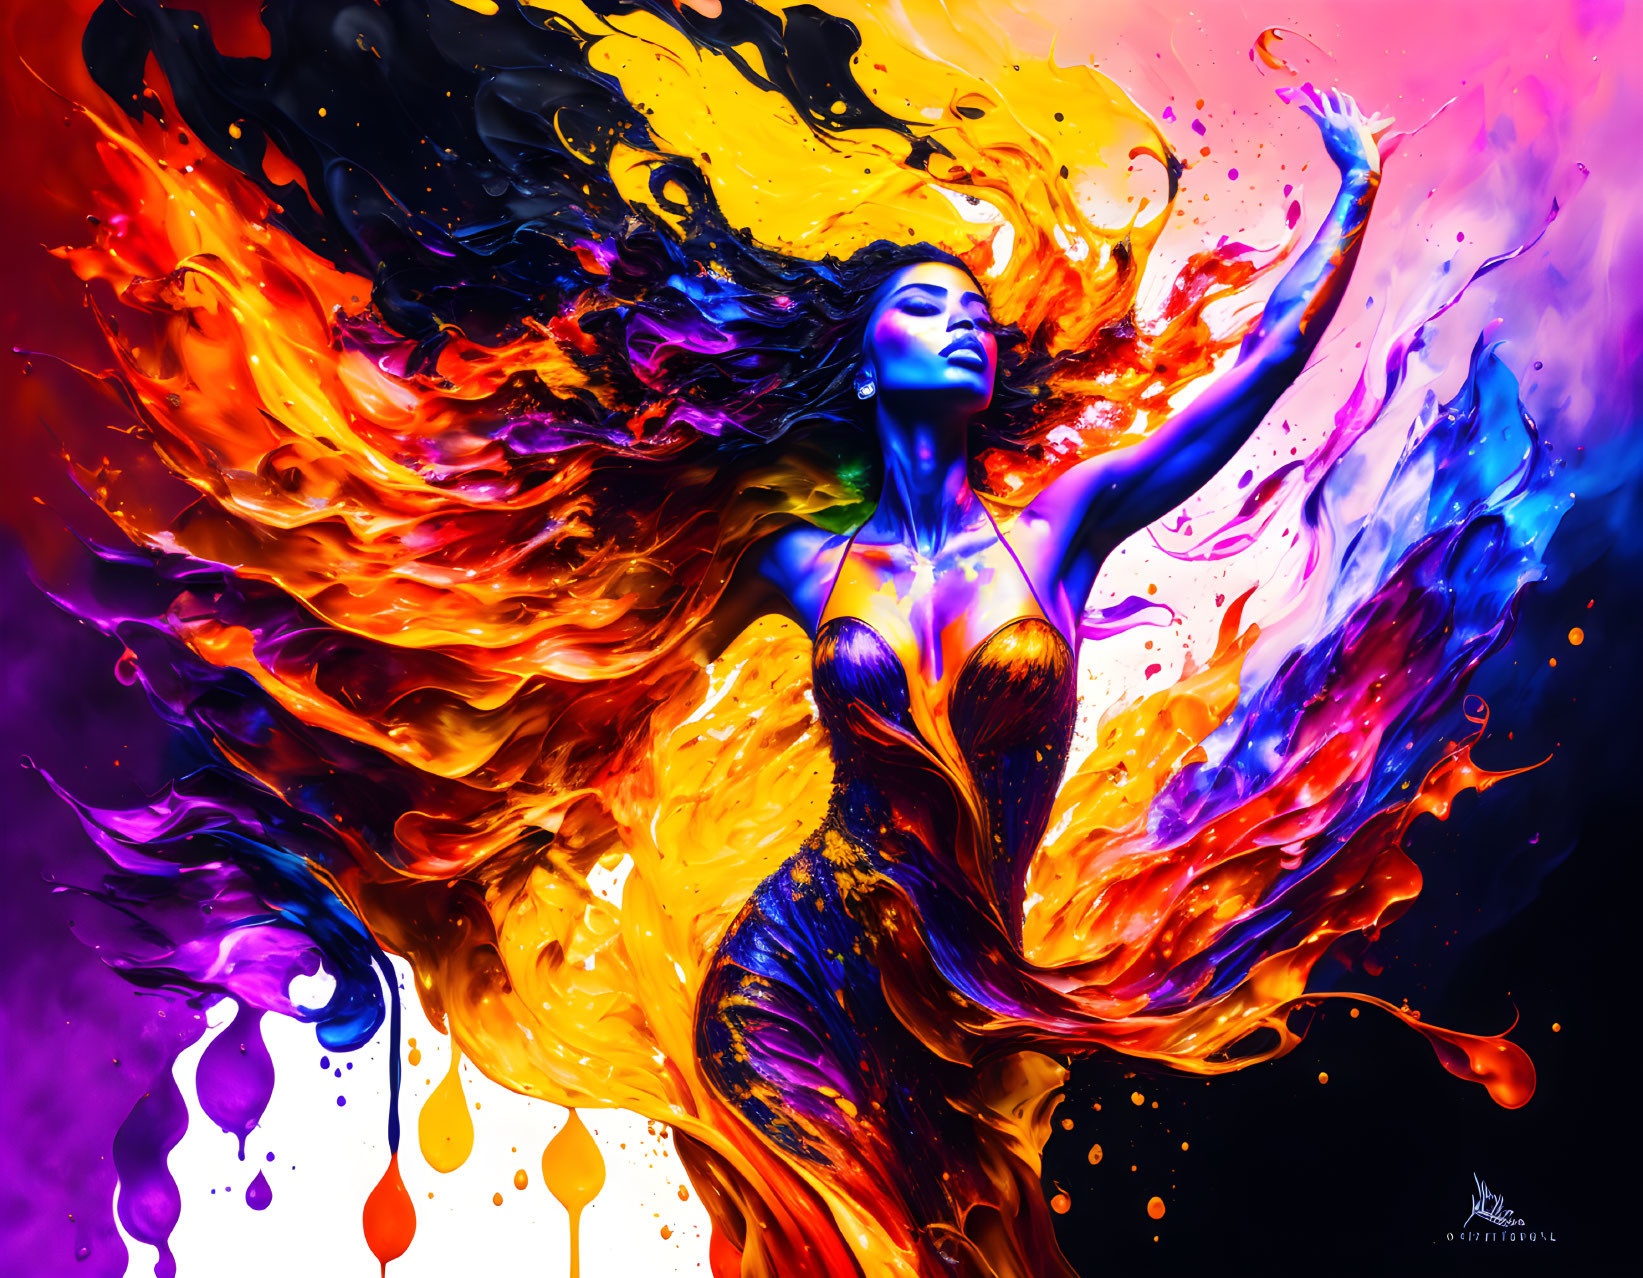 Dancing Flames: An Energetic Masterpiece